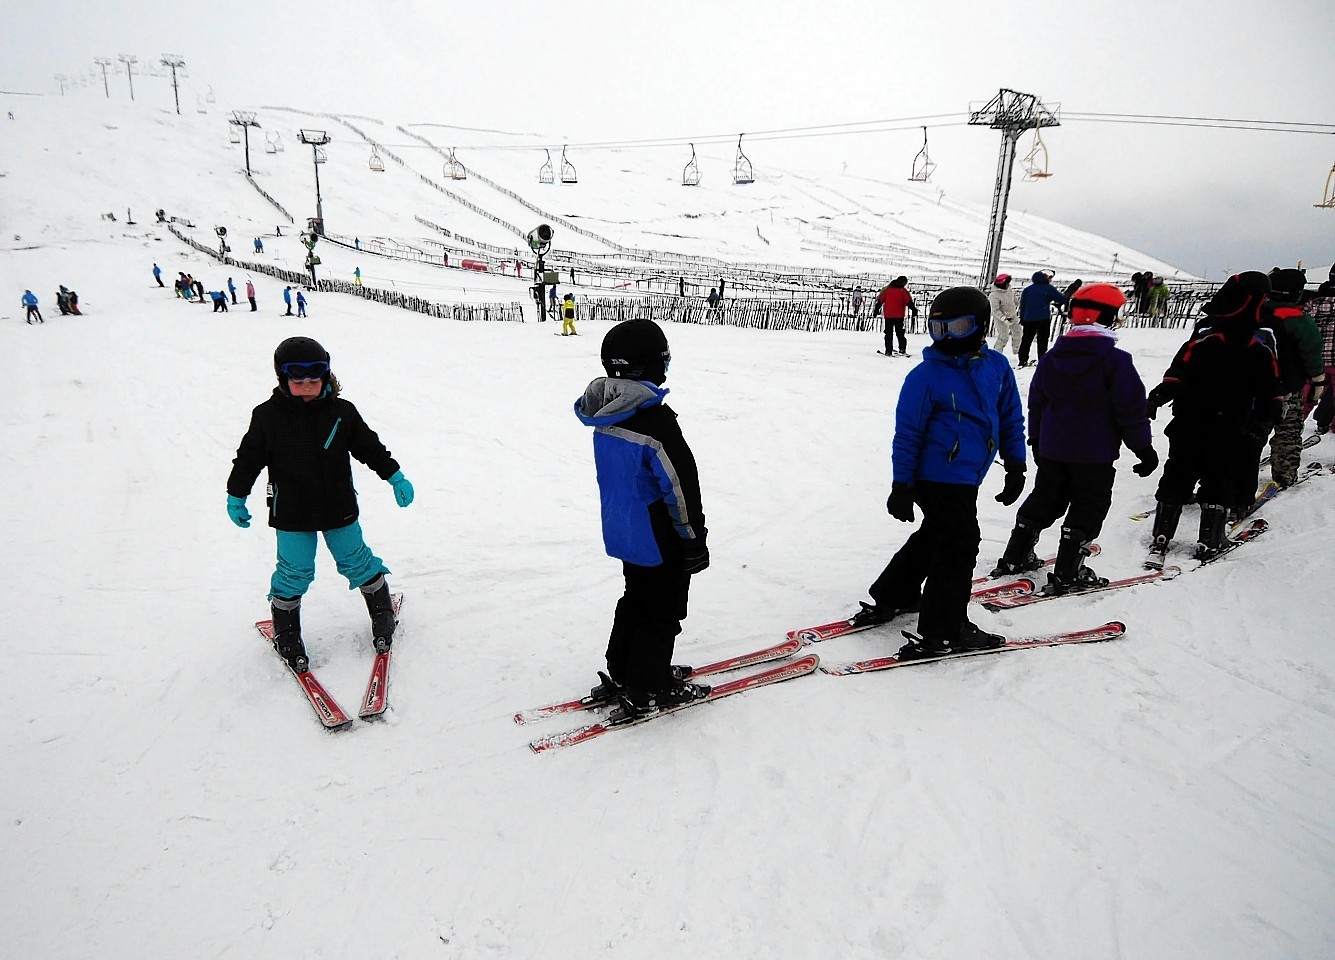 CairnGorm skiers